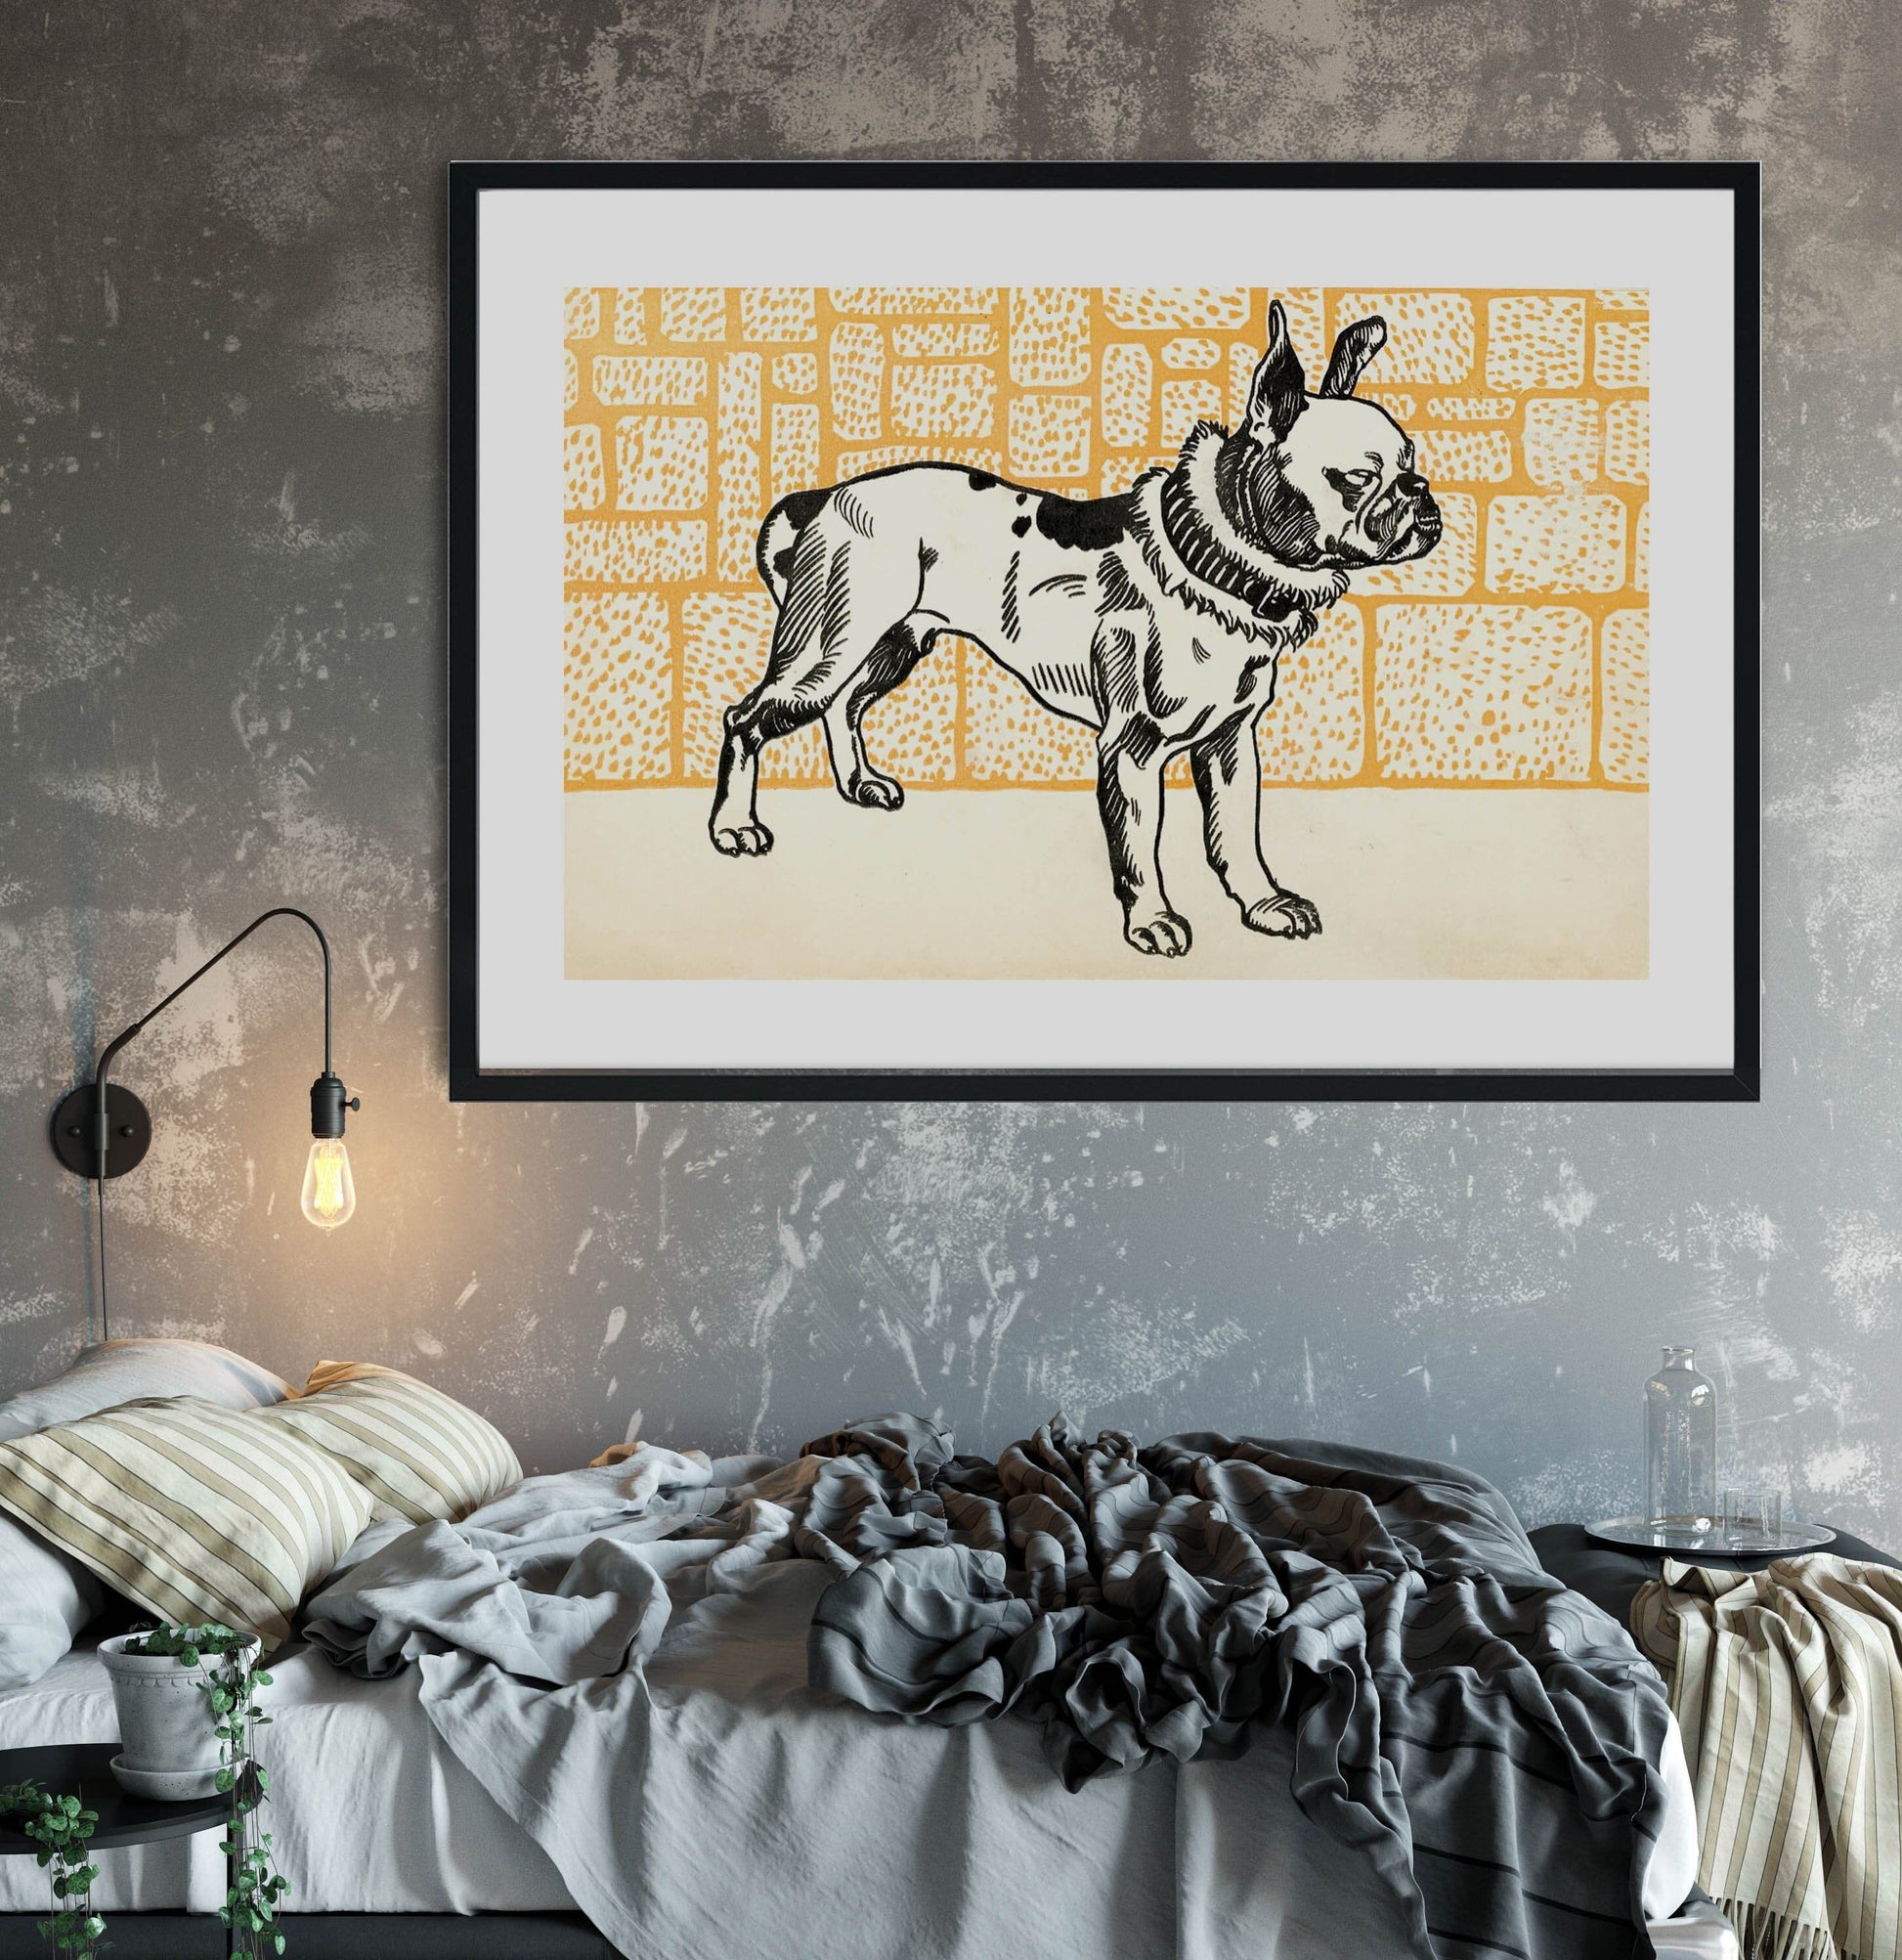 Framed frenchie dog print, vintage print dog art print, bulldog wall art, vintage dog art antique dog print, vintage poster french bulldog Vintage Animal Prints